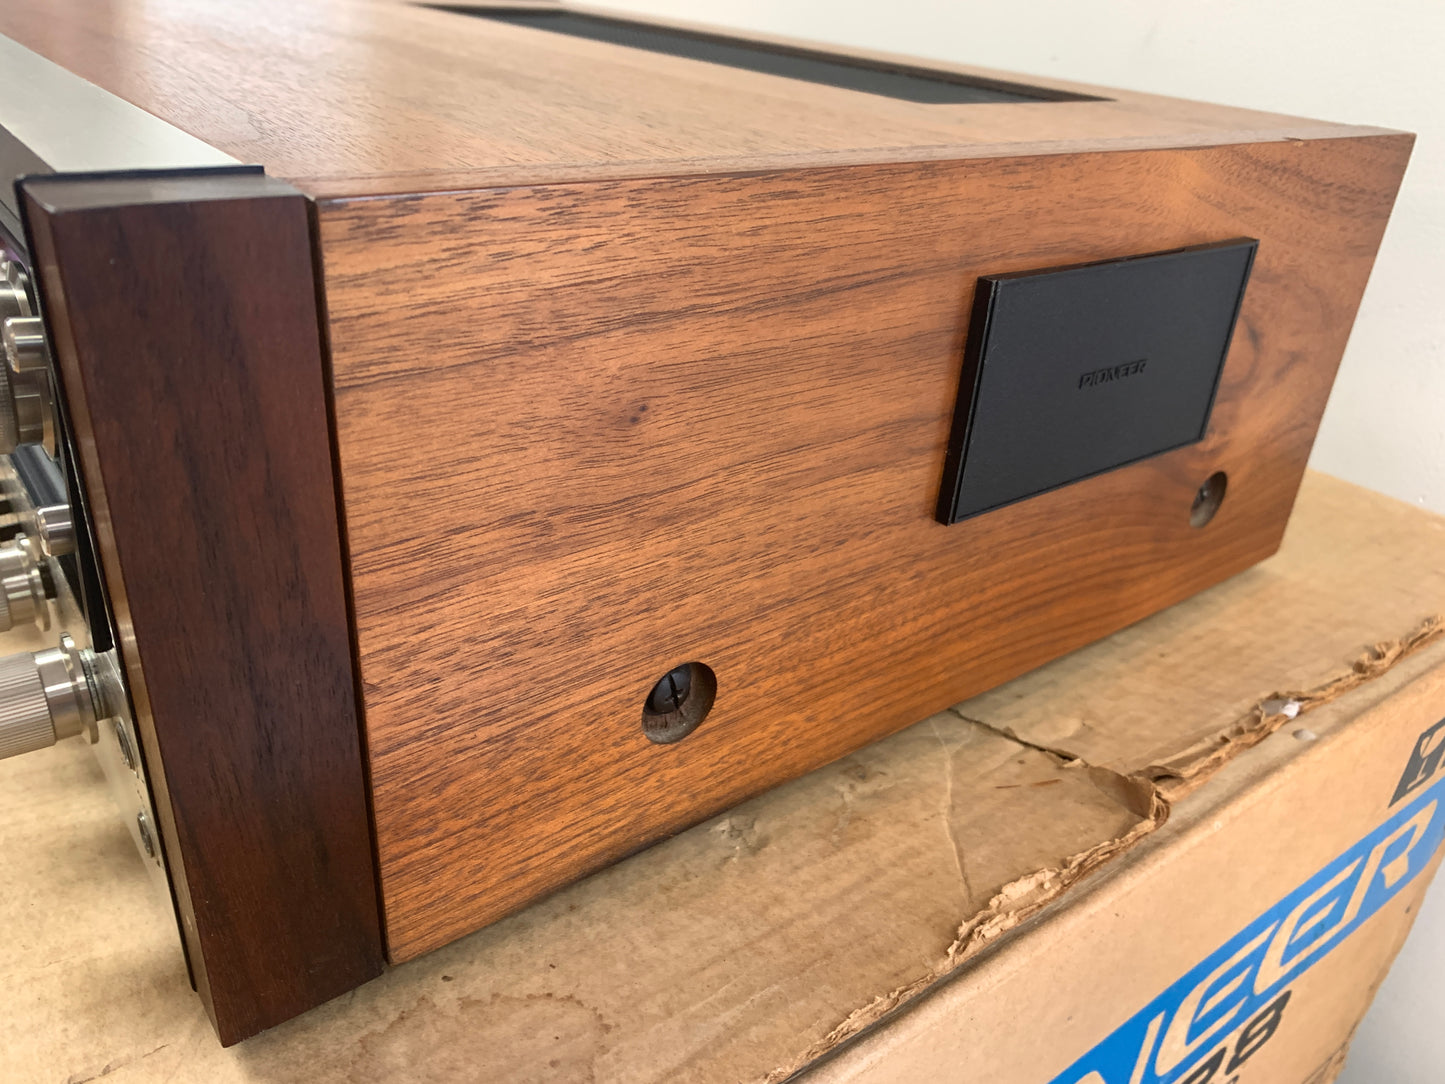 Pioneer SX-828 Stereo Receiver * Original Box * $100 Flat Ship CONUS Only